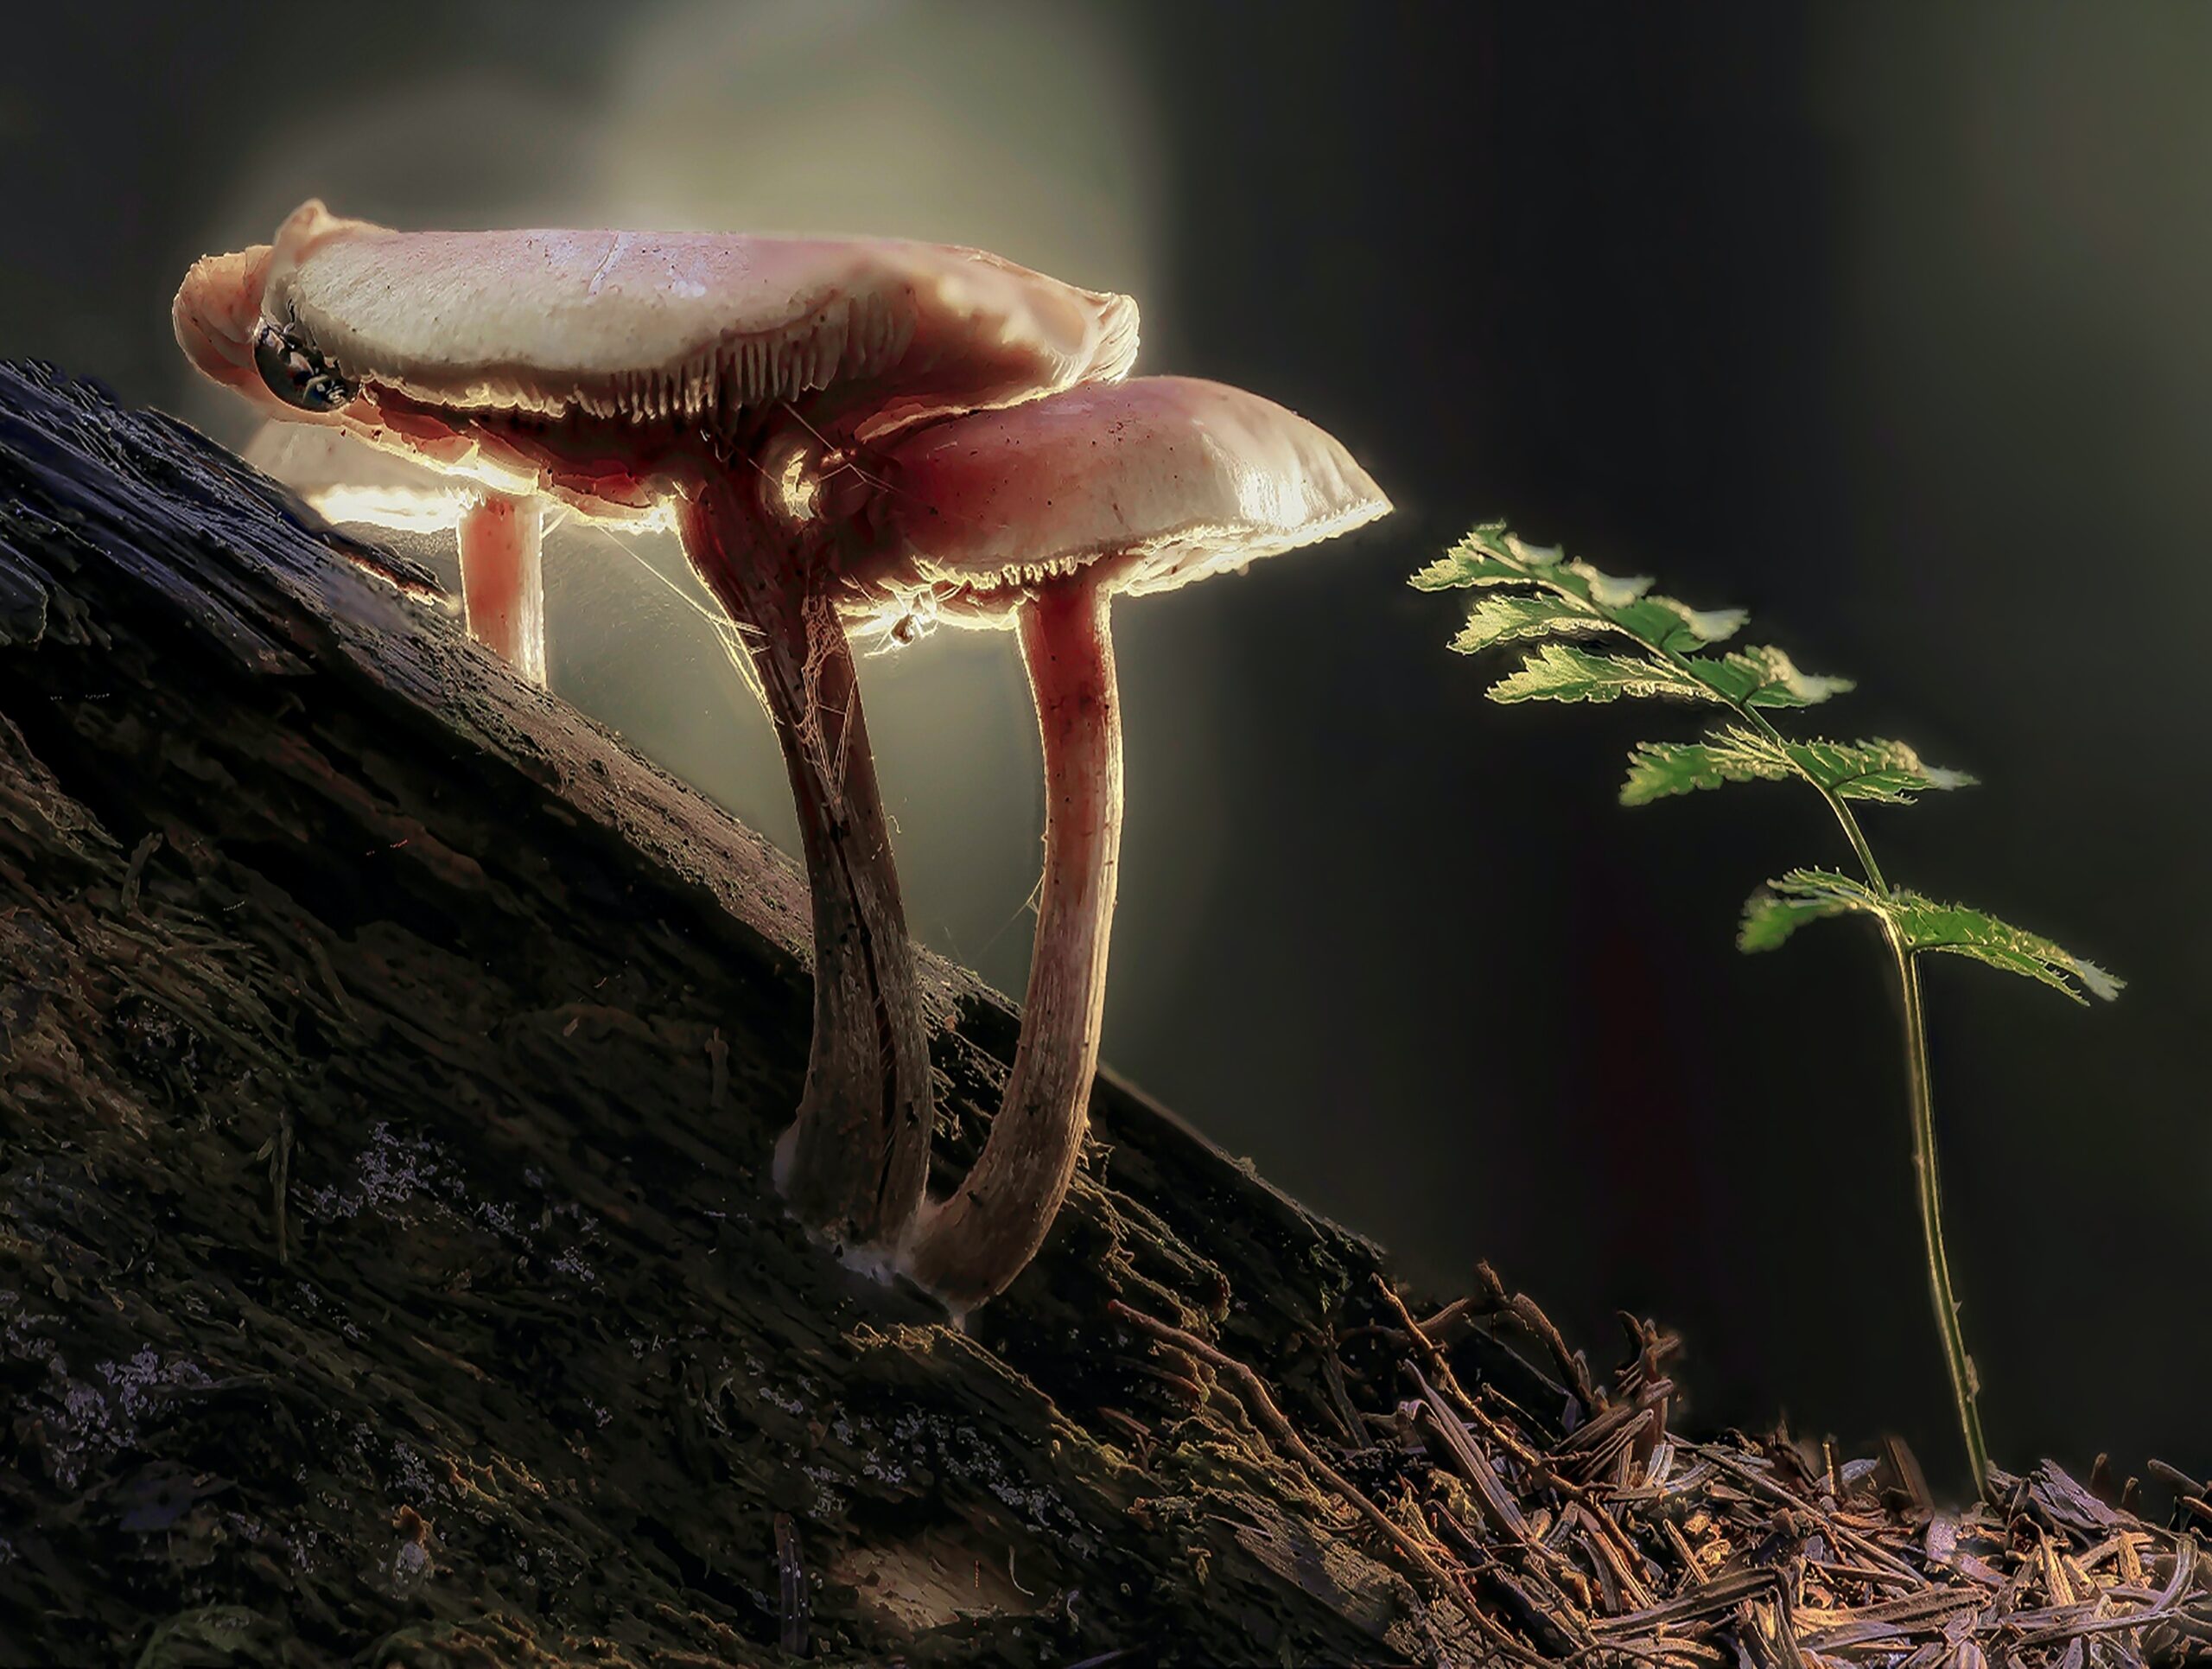 Mushrooms are not Plants